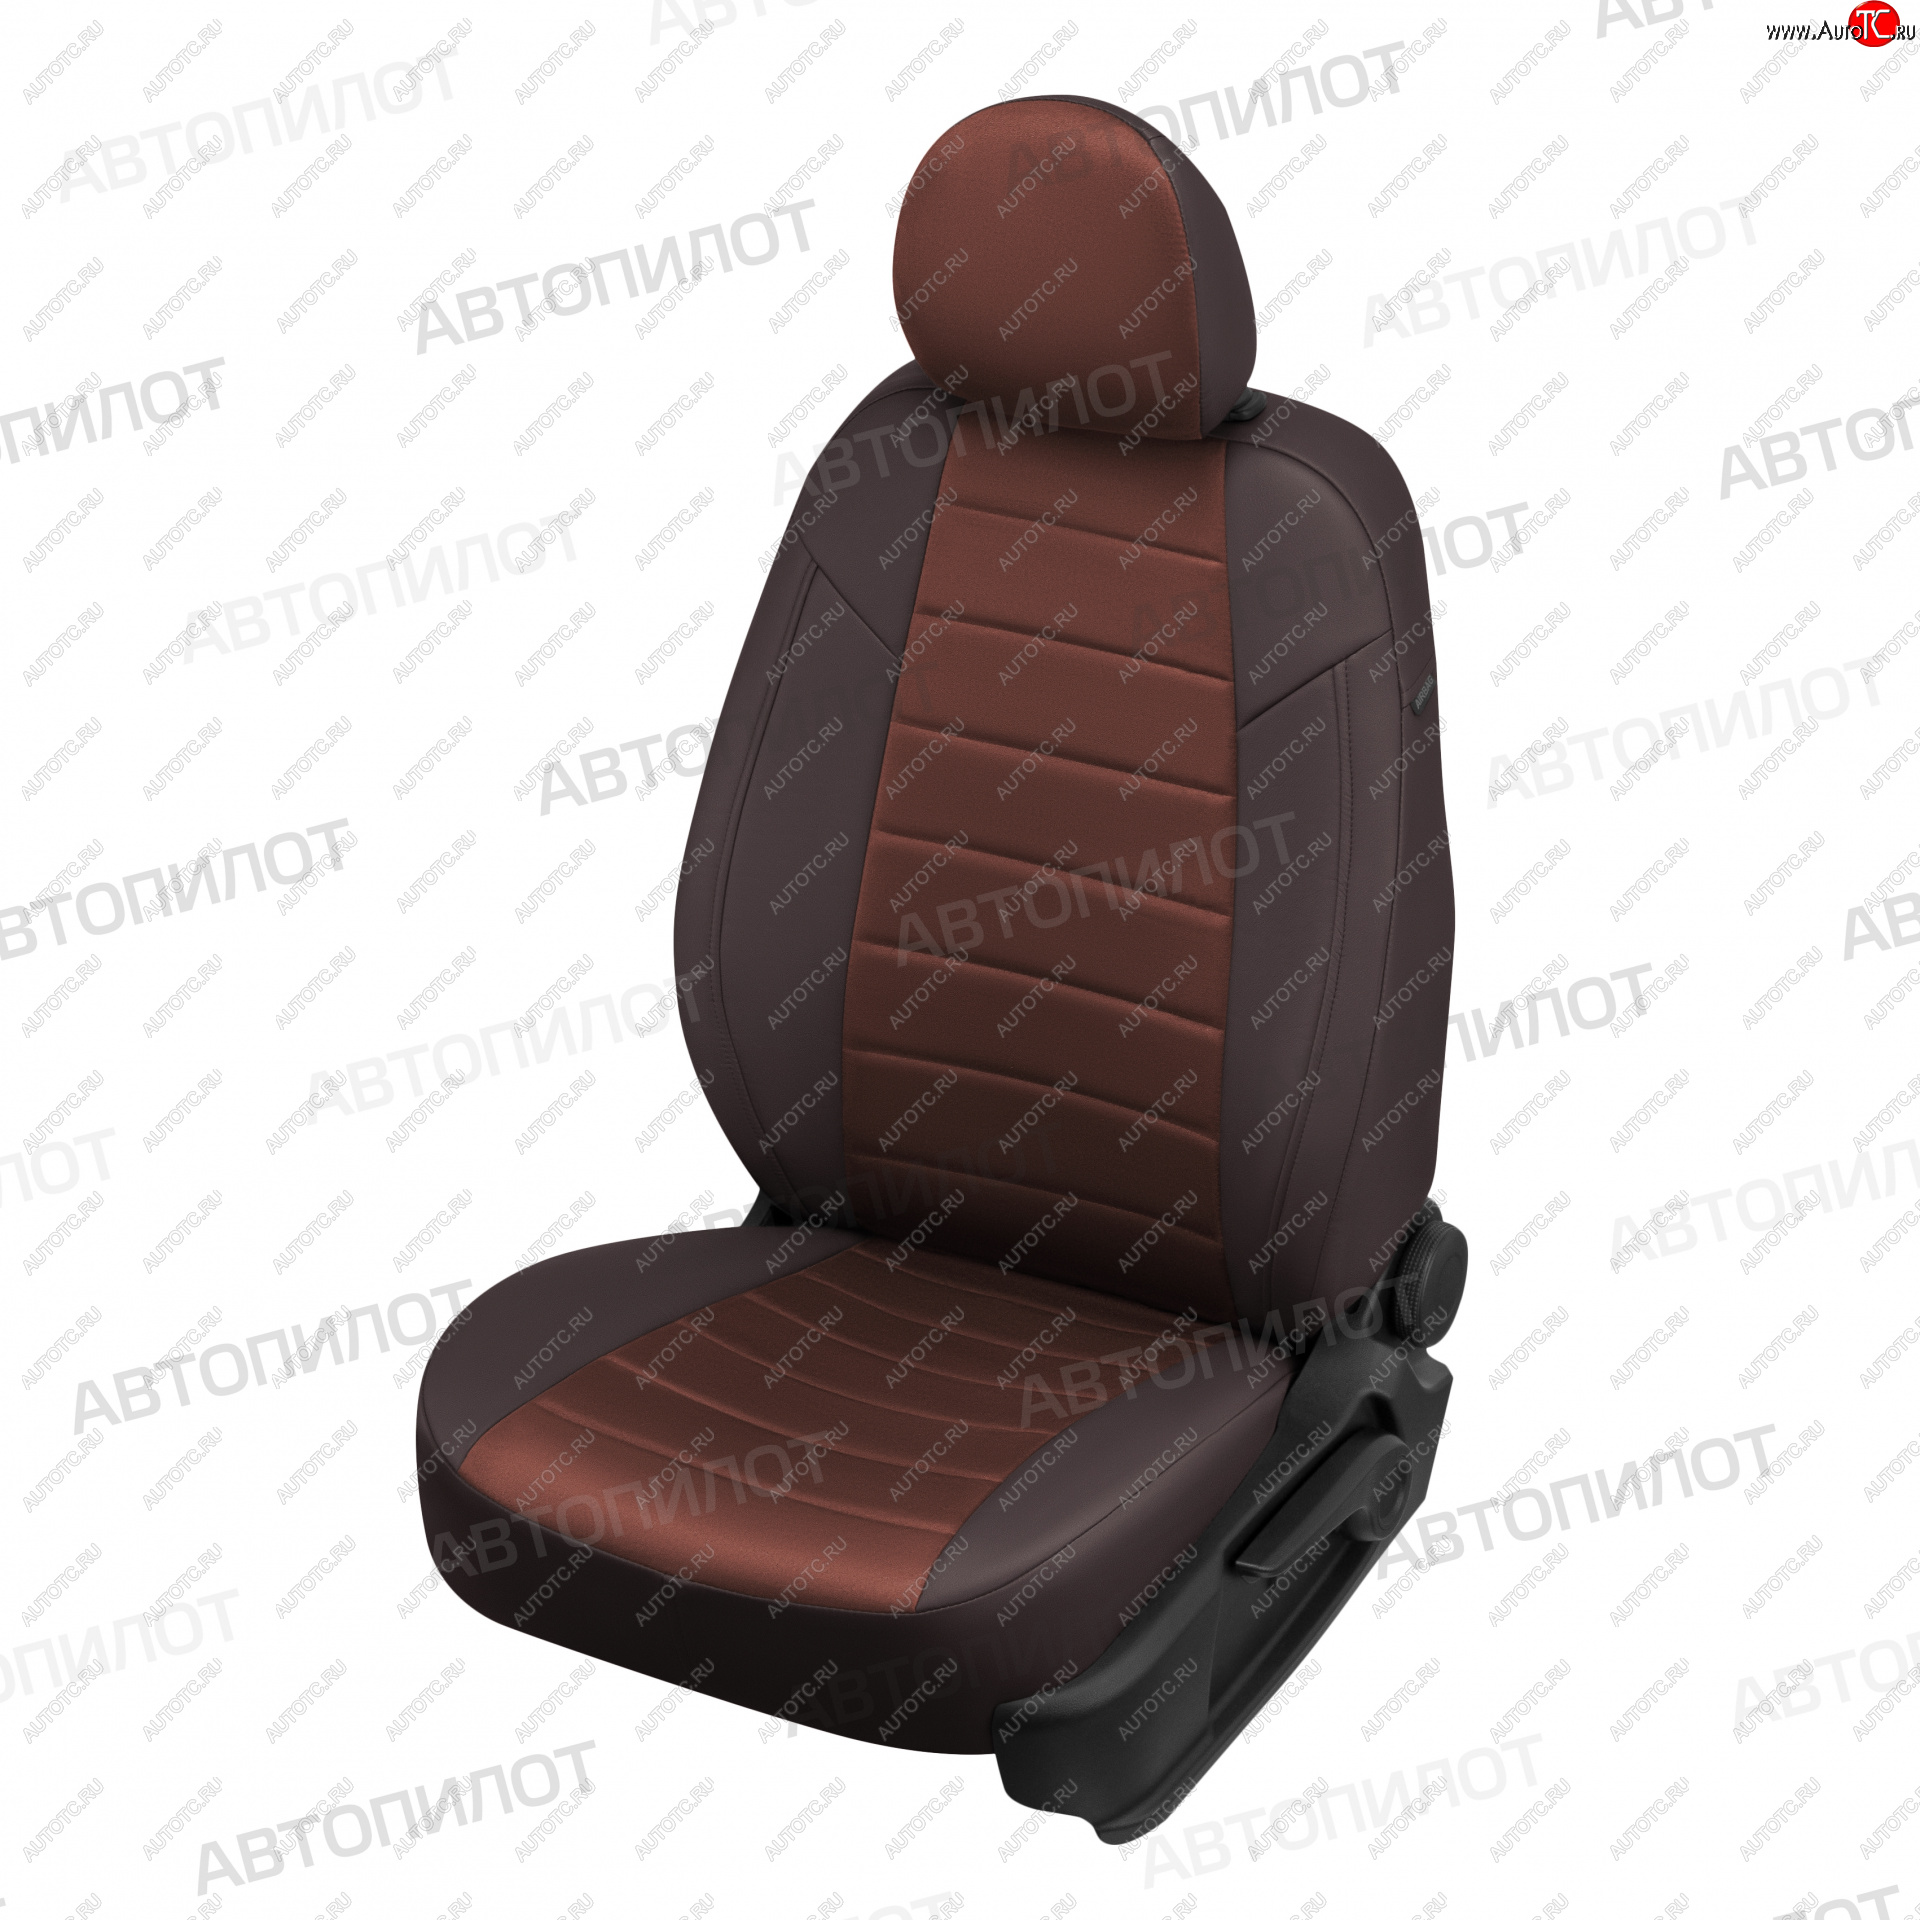 13 449 р. Чехлы сидений (экокожа/алькантара) Автопилот  Ford Fiesta  6 (2008-2019) (шоколад)